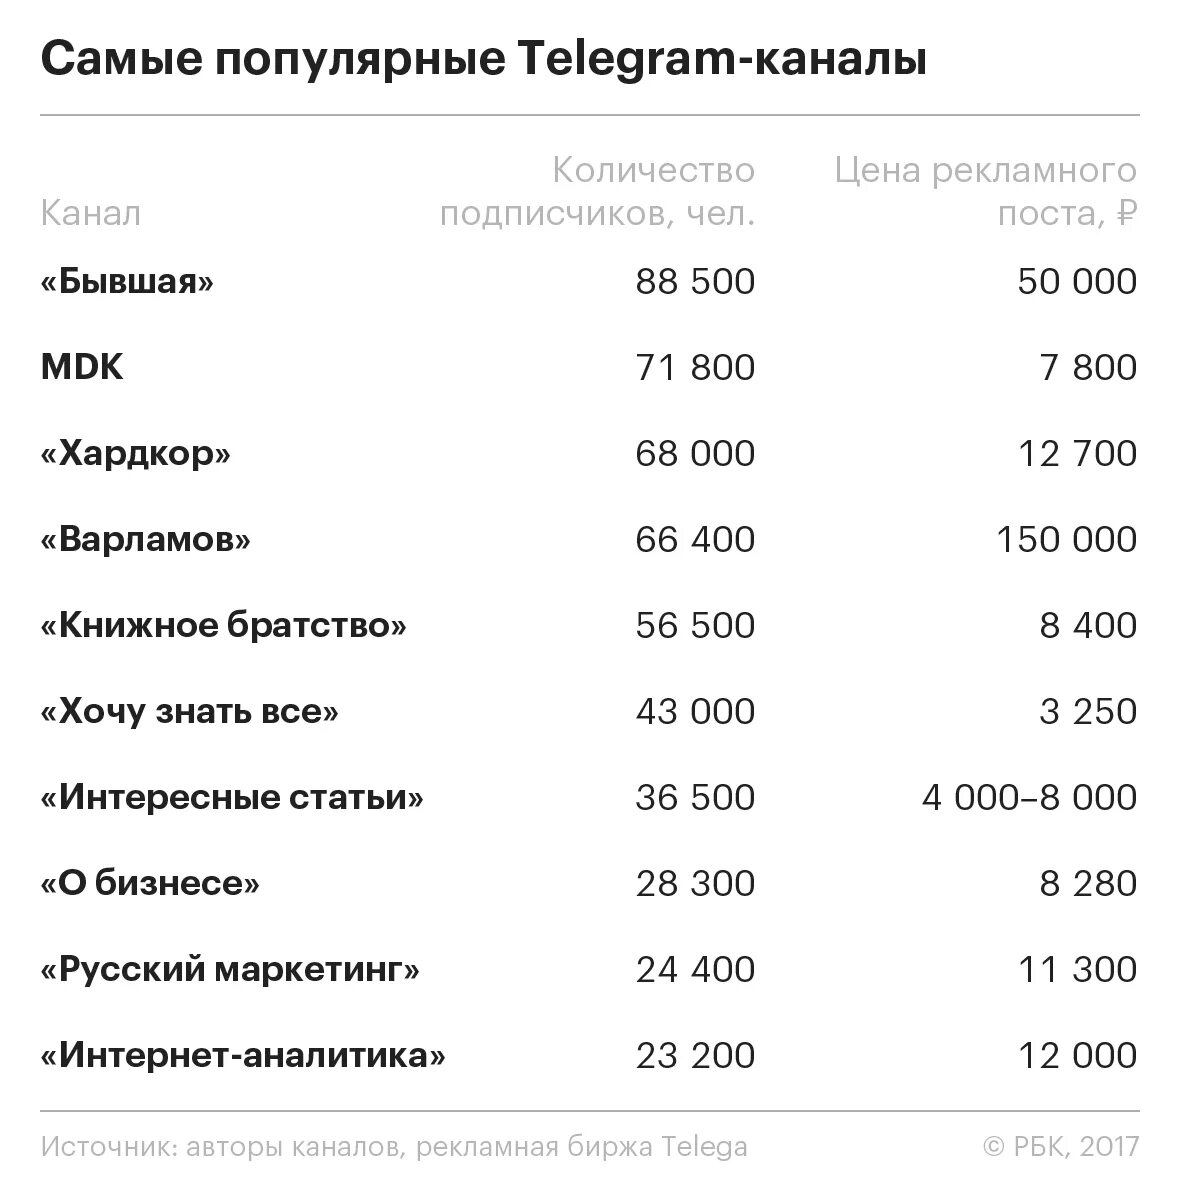 Самый популярный Telegram канал. Популярные каналы в Telegram. Популярные телеграм каналы. Самые популярные телеграм каналы.